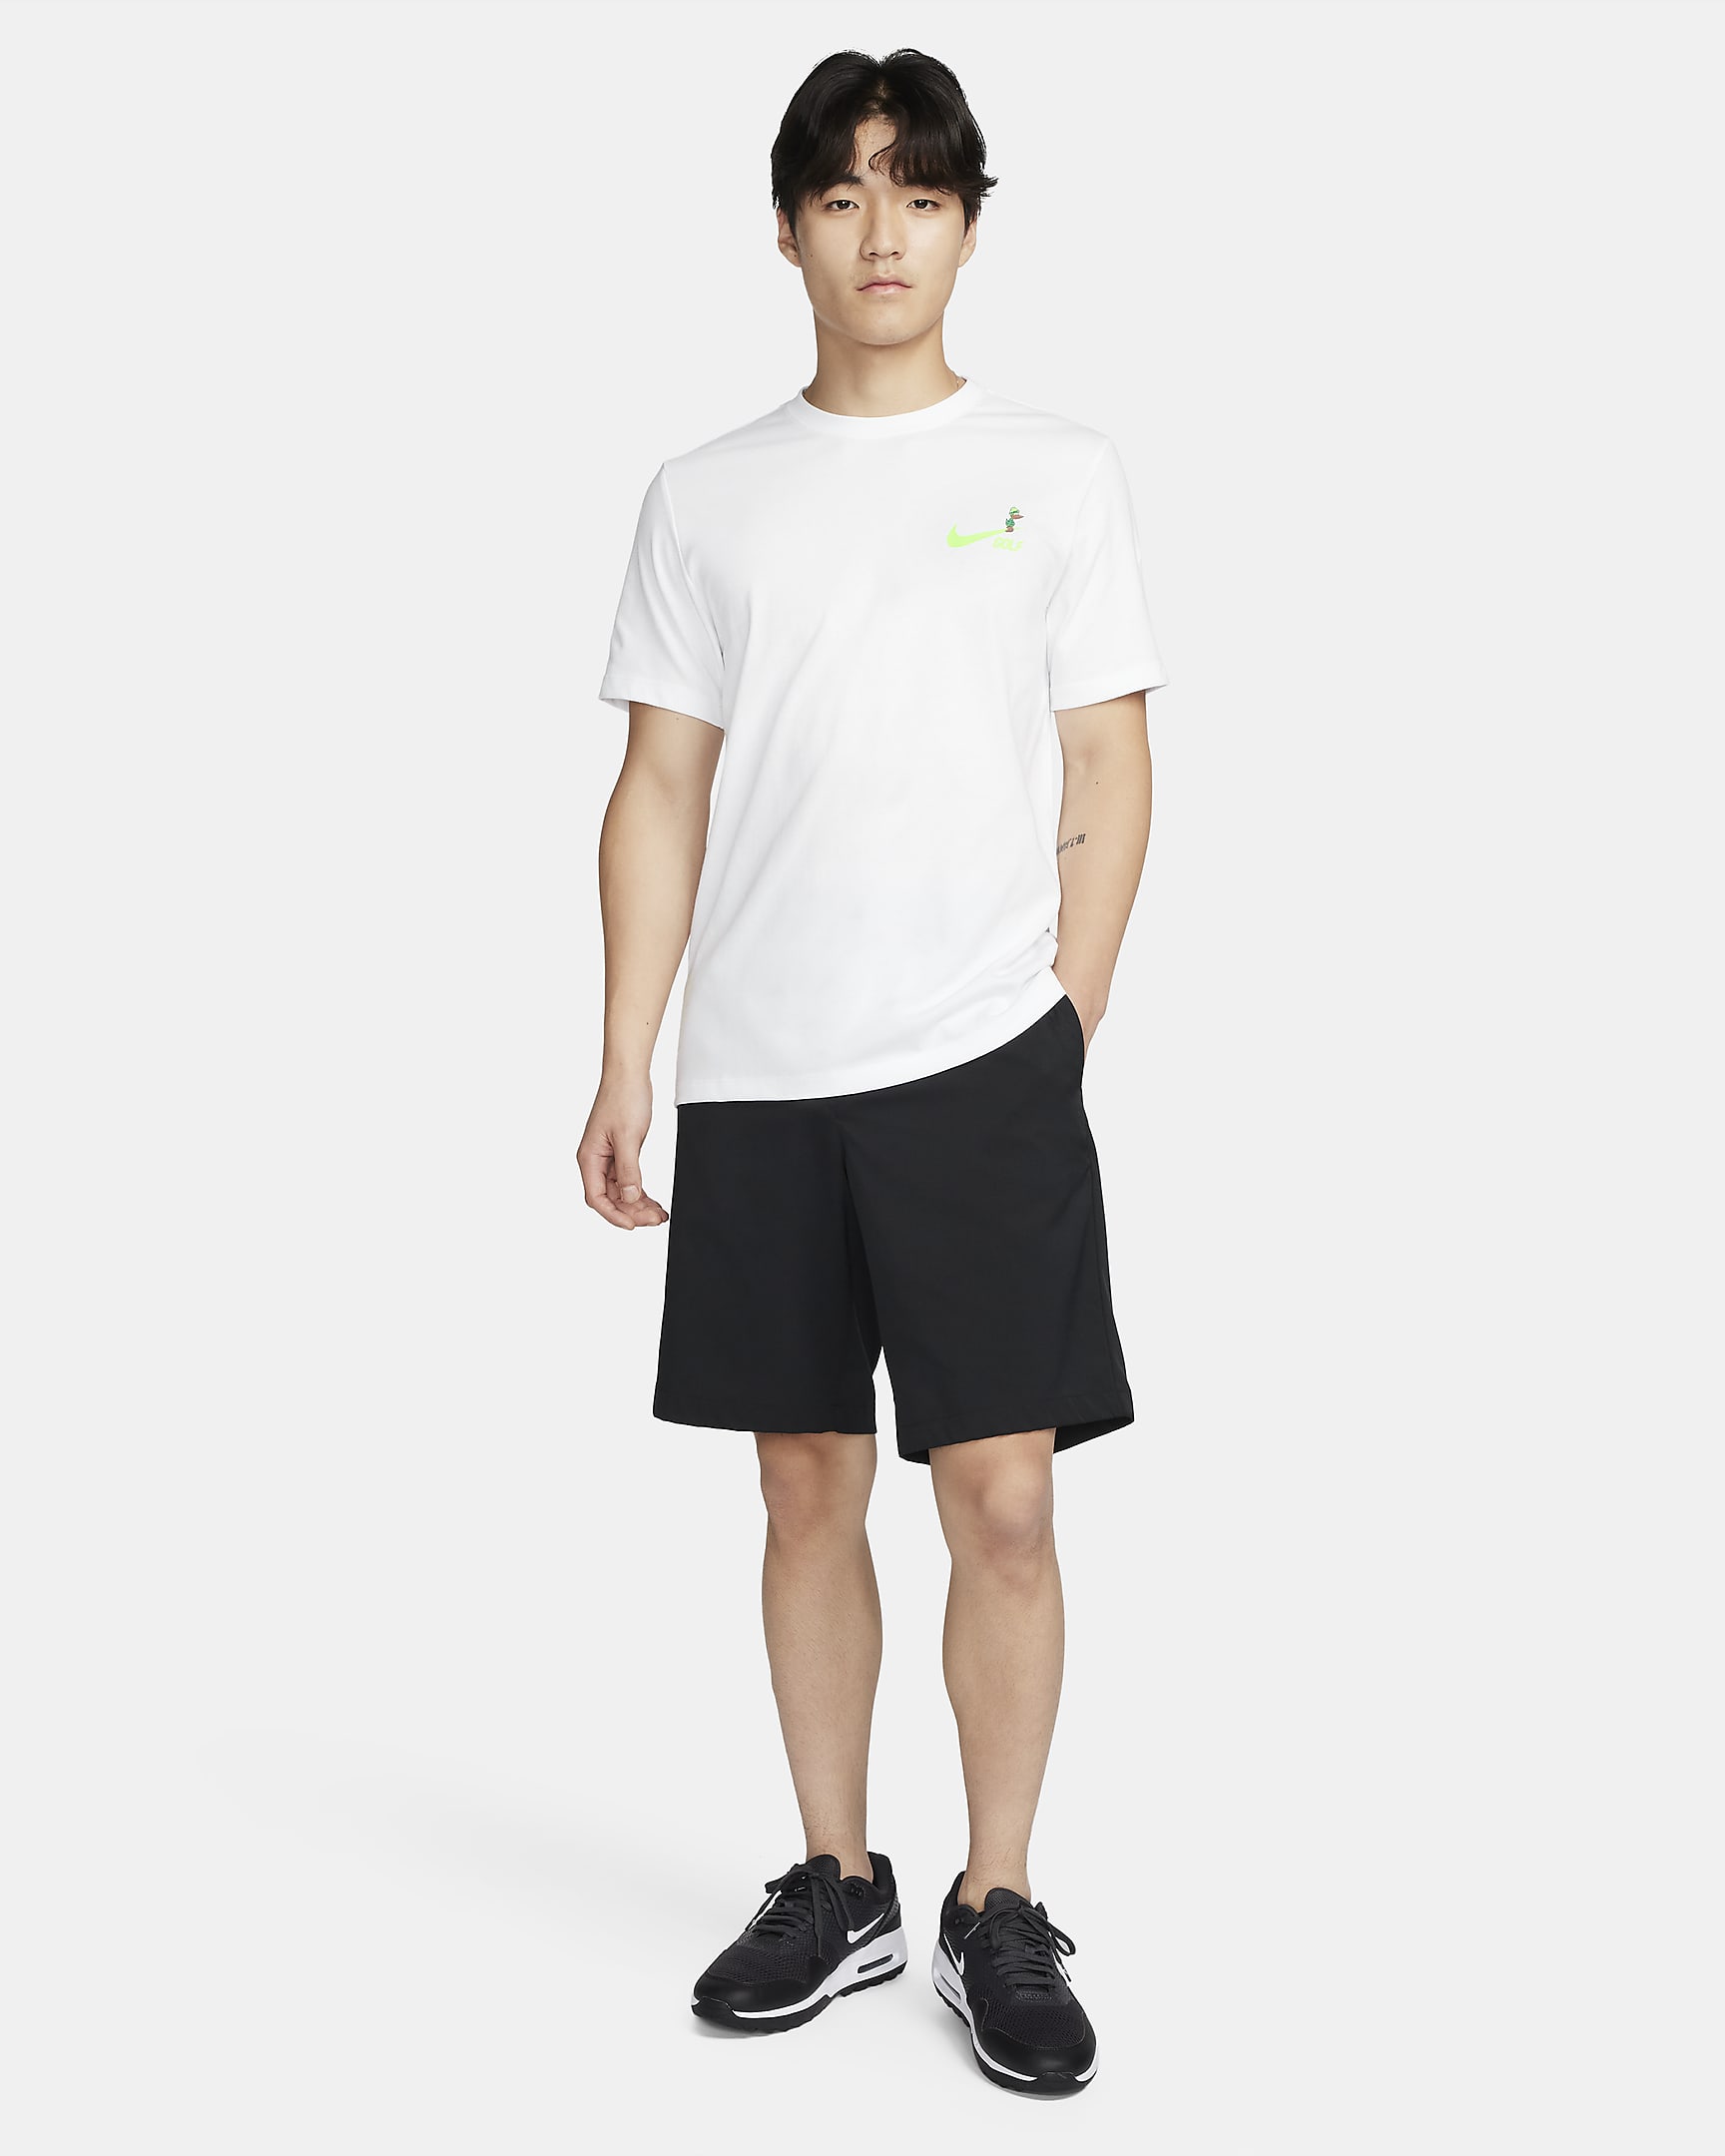 Nike Men's Swoosh Golf T-Shirt. Nike PH